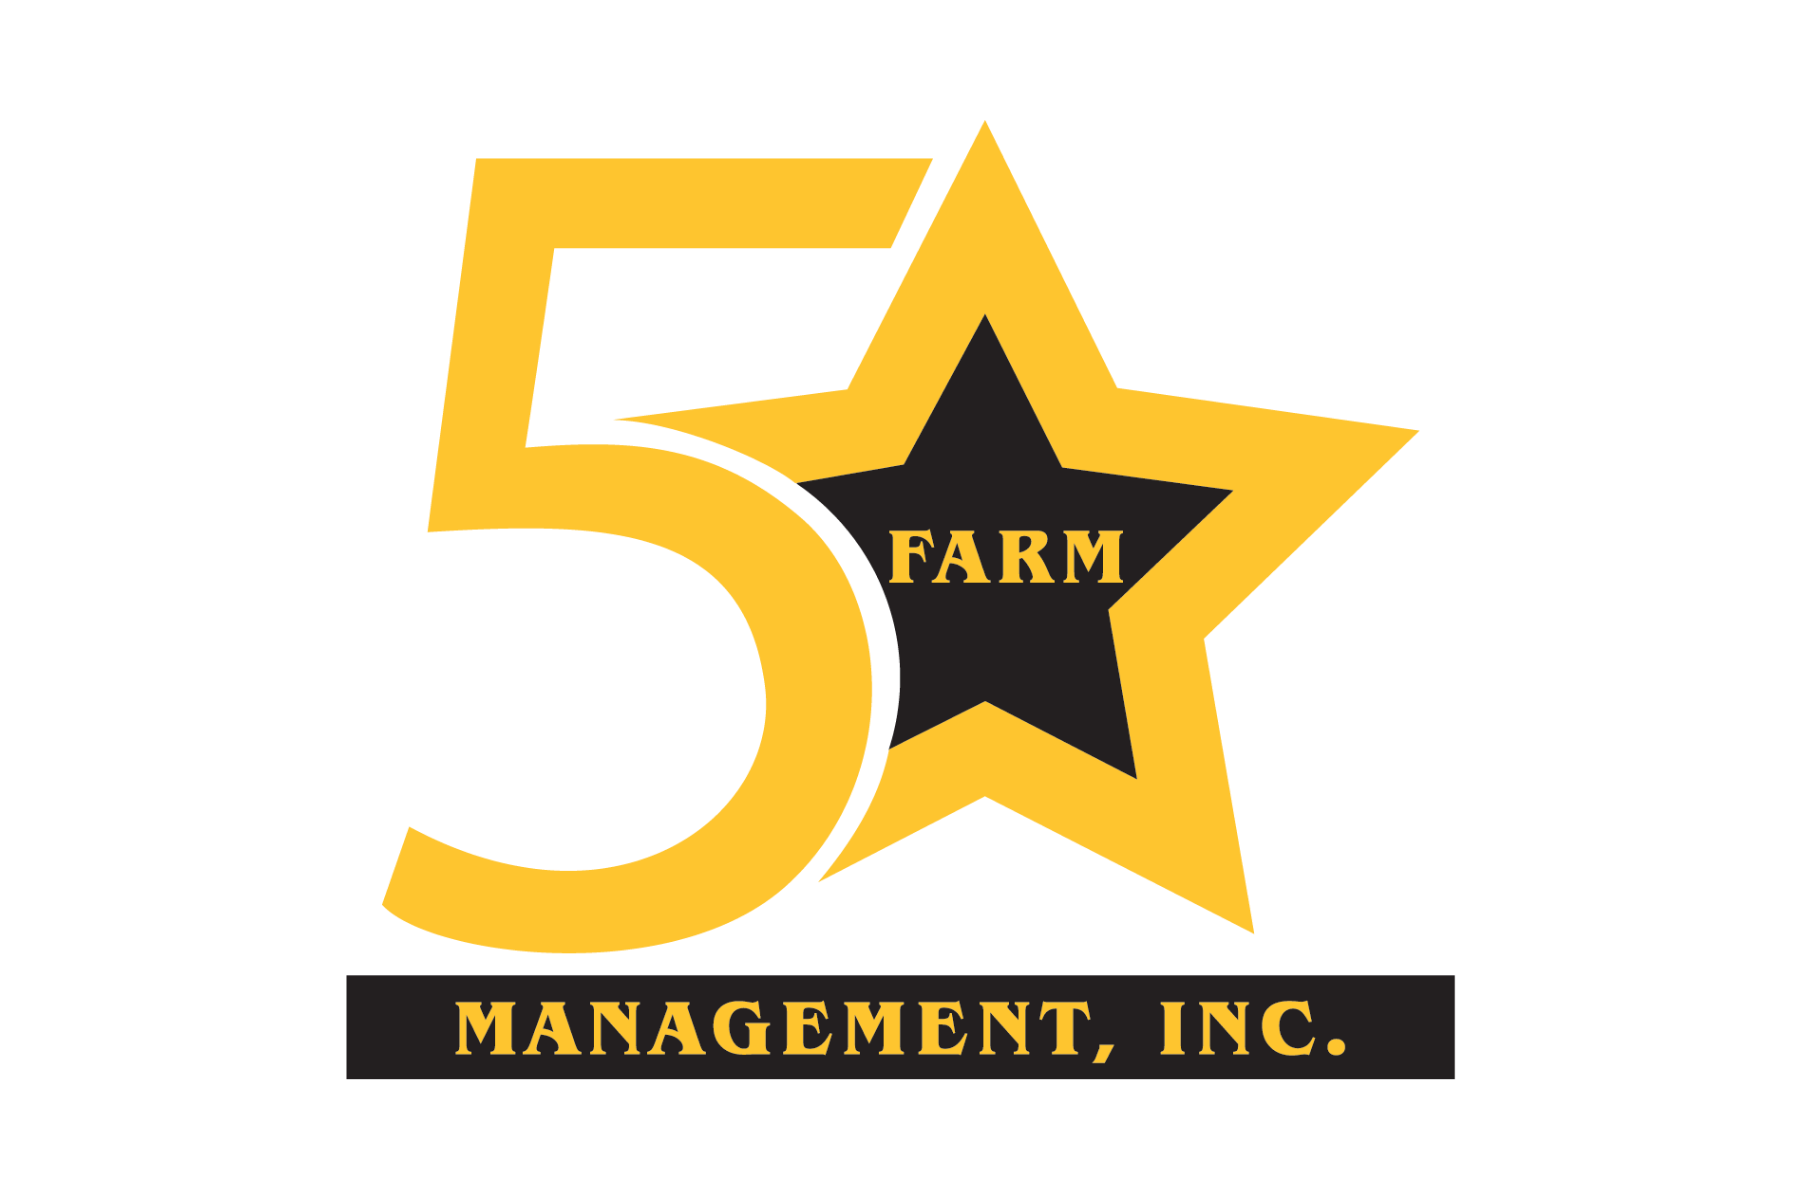 5 Star Farm Management, Inc. logo.